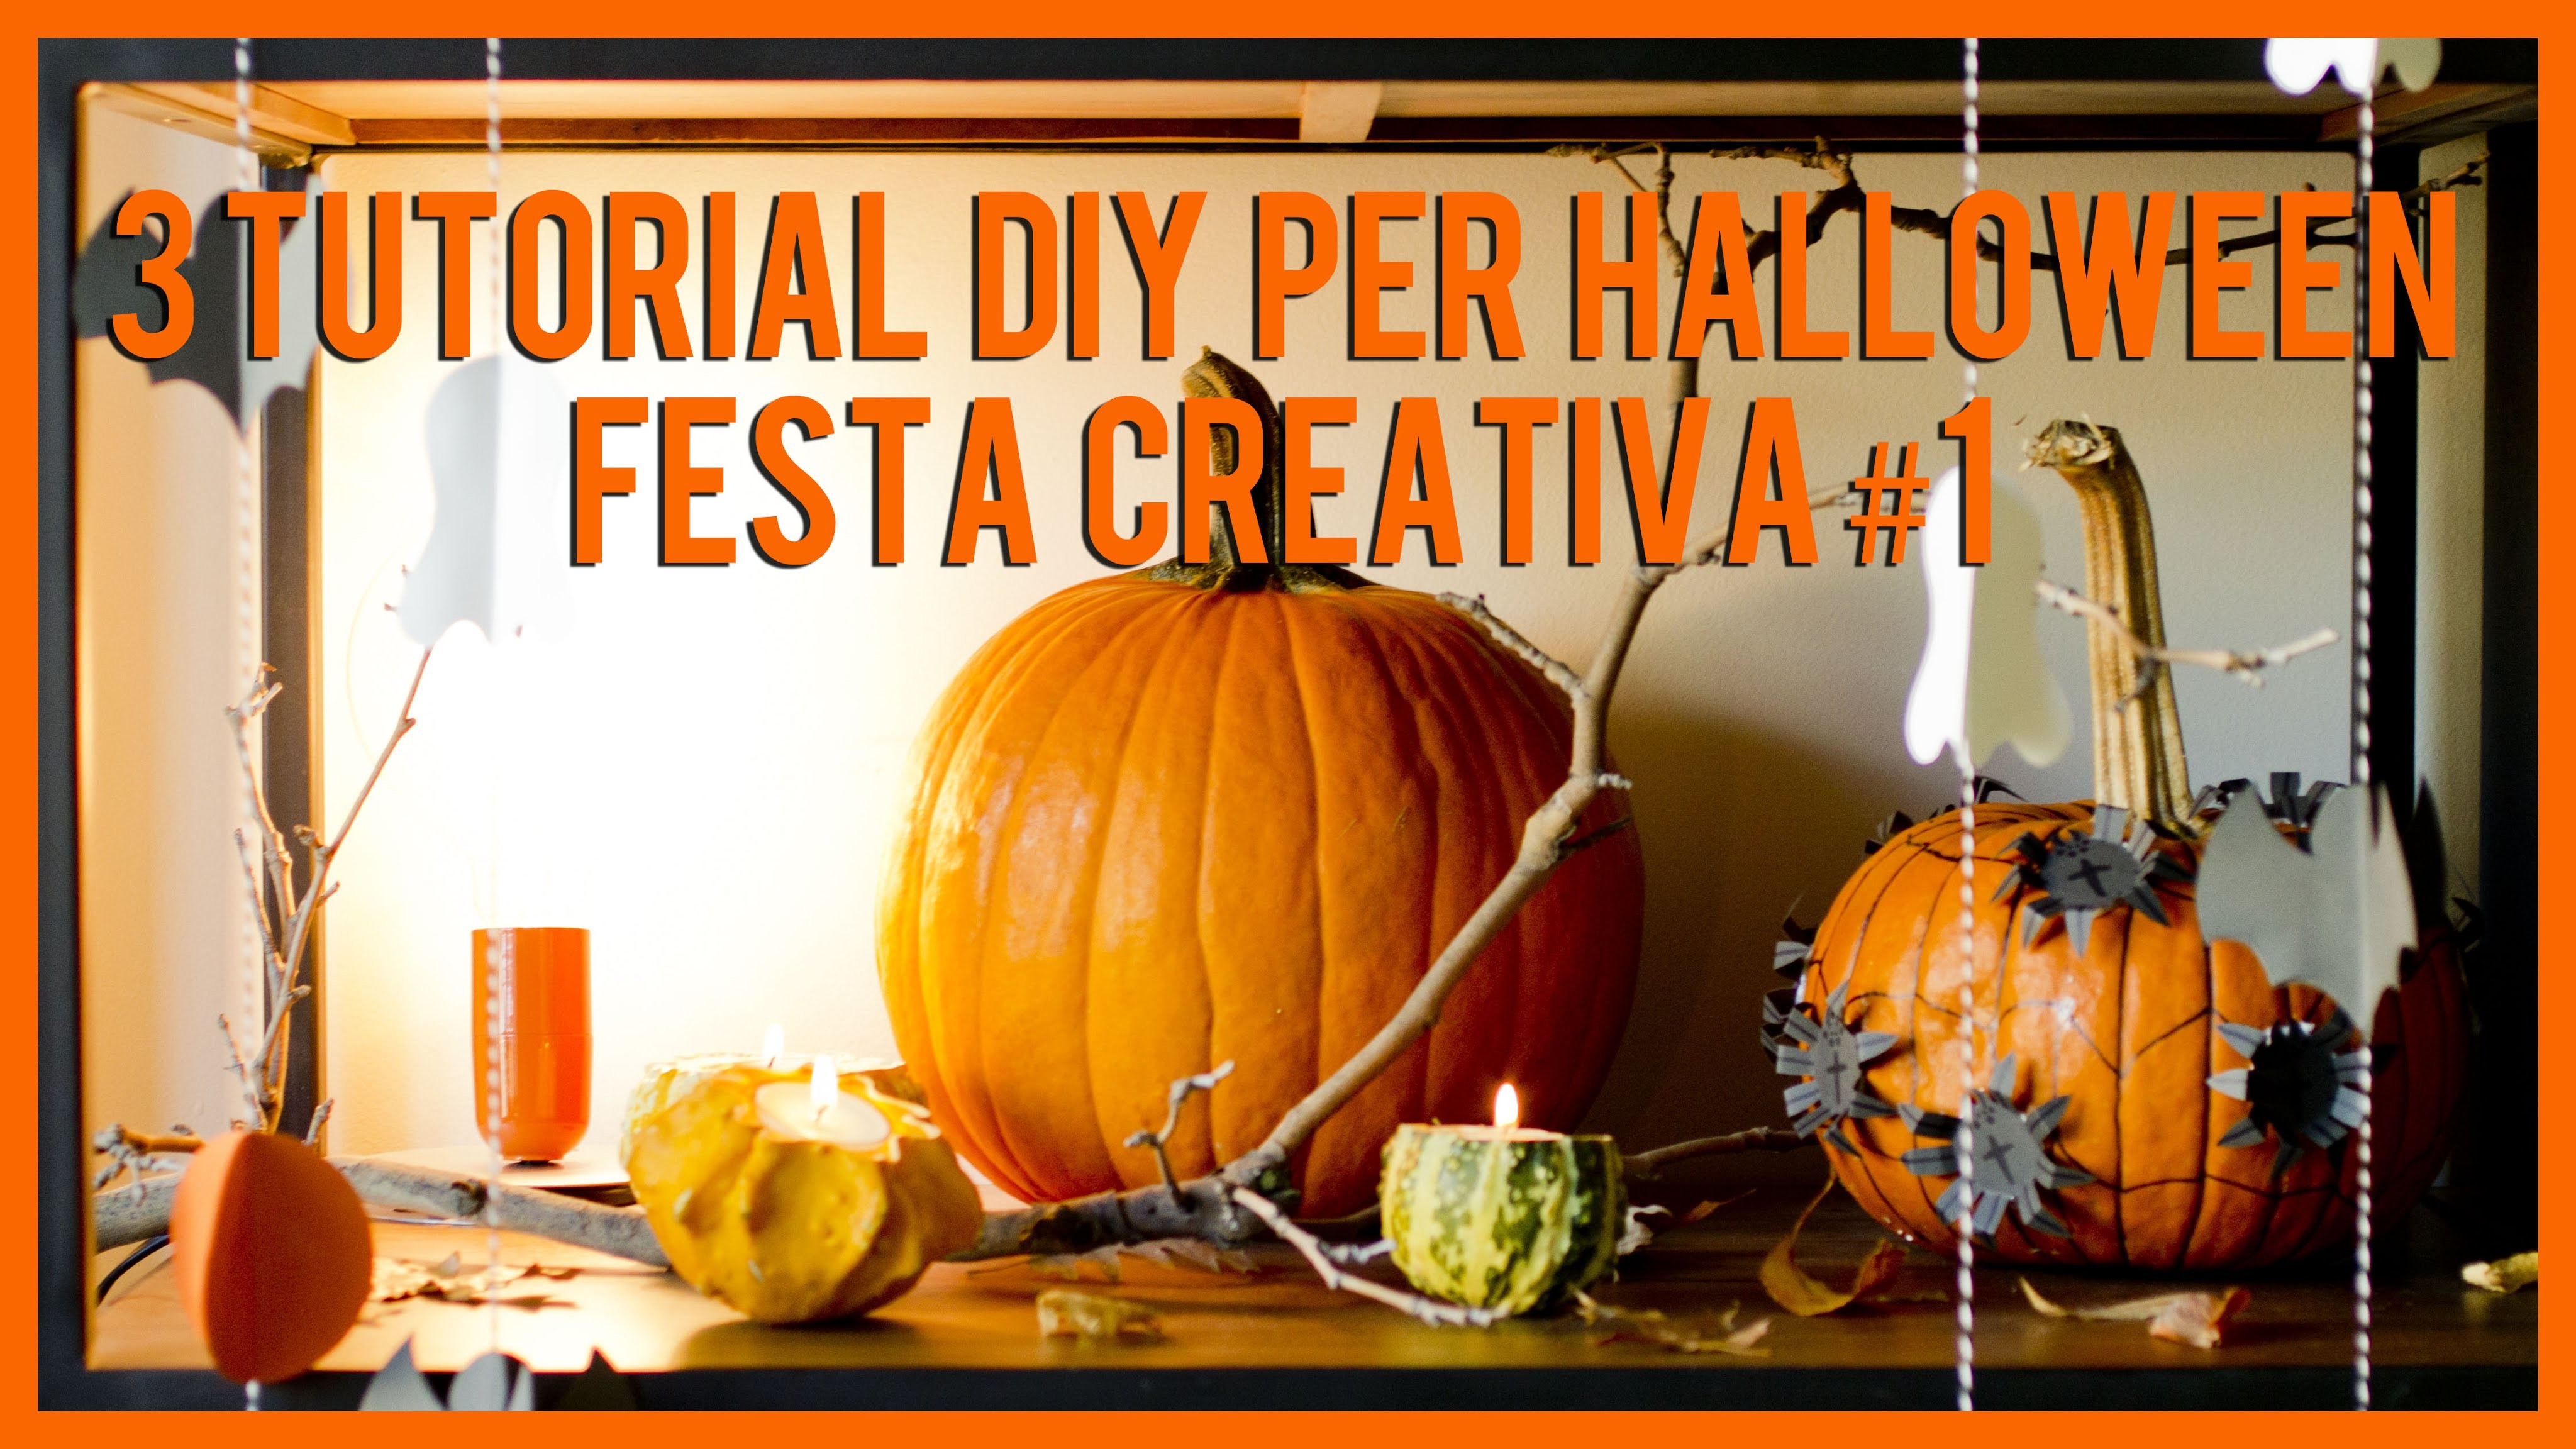 3 tutorial DIY per Halloween - Festa creativa #1